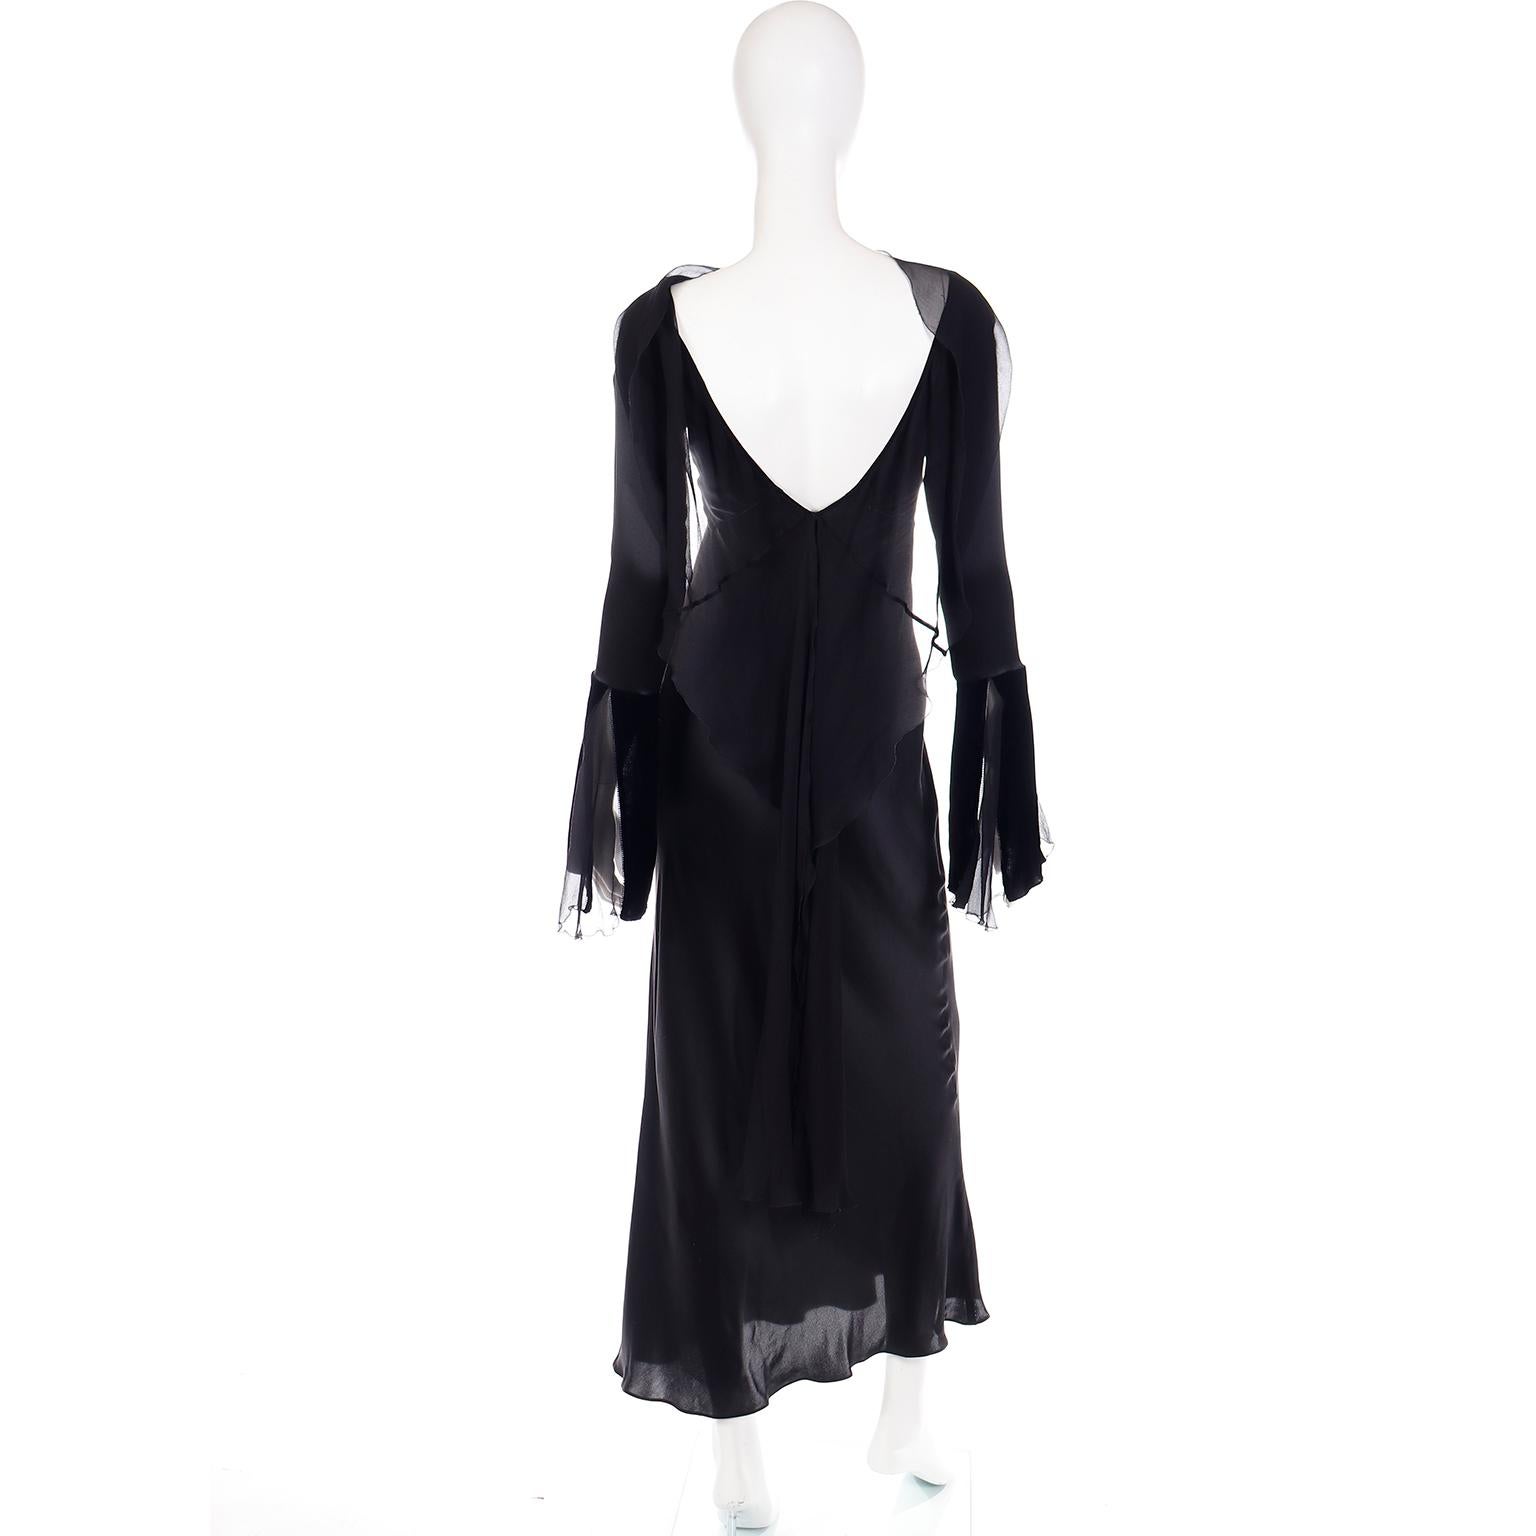 Alberta Ferretti 1990s Vintage Black Silk Evening Gown Dress W Statement Sleeves 1